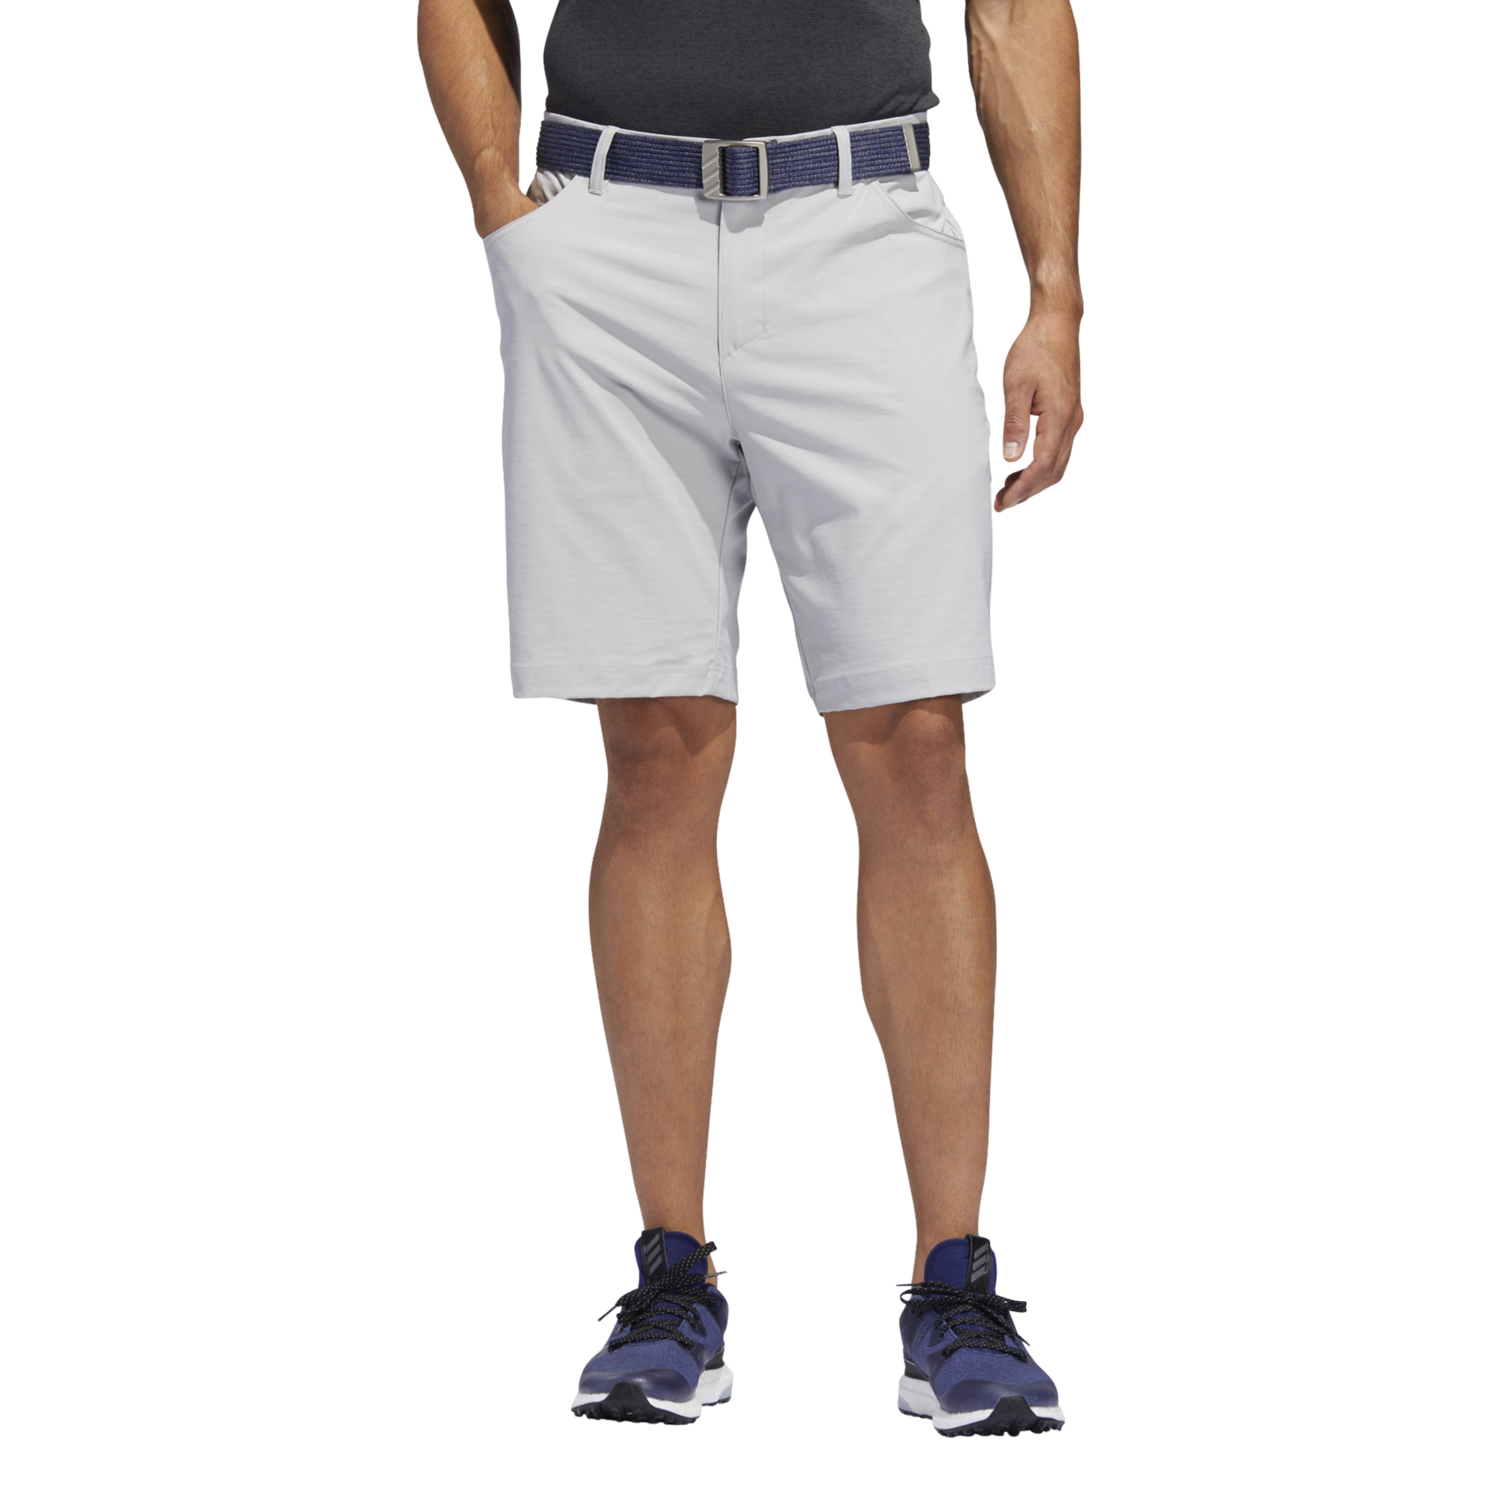 adidas shorts with phone pocket